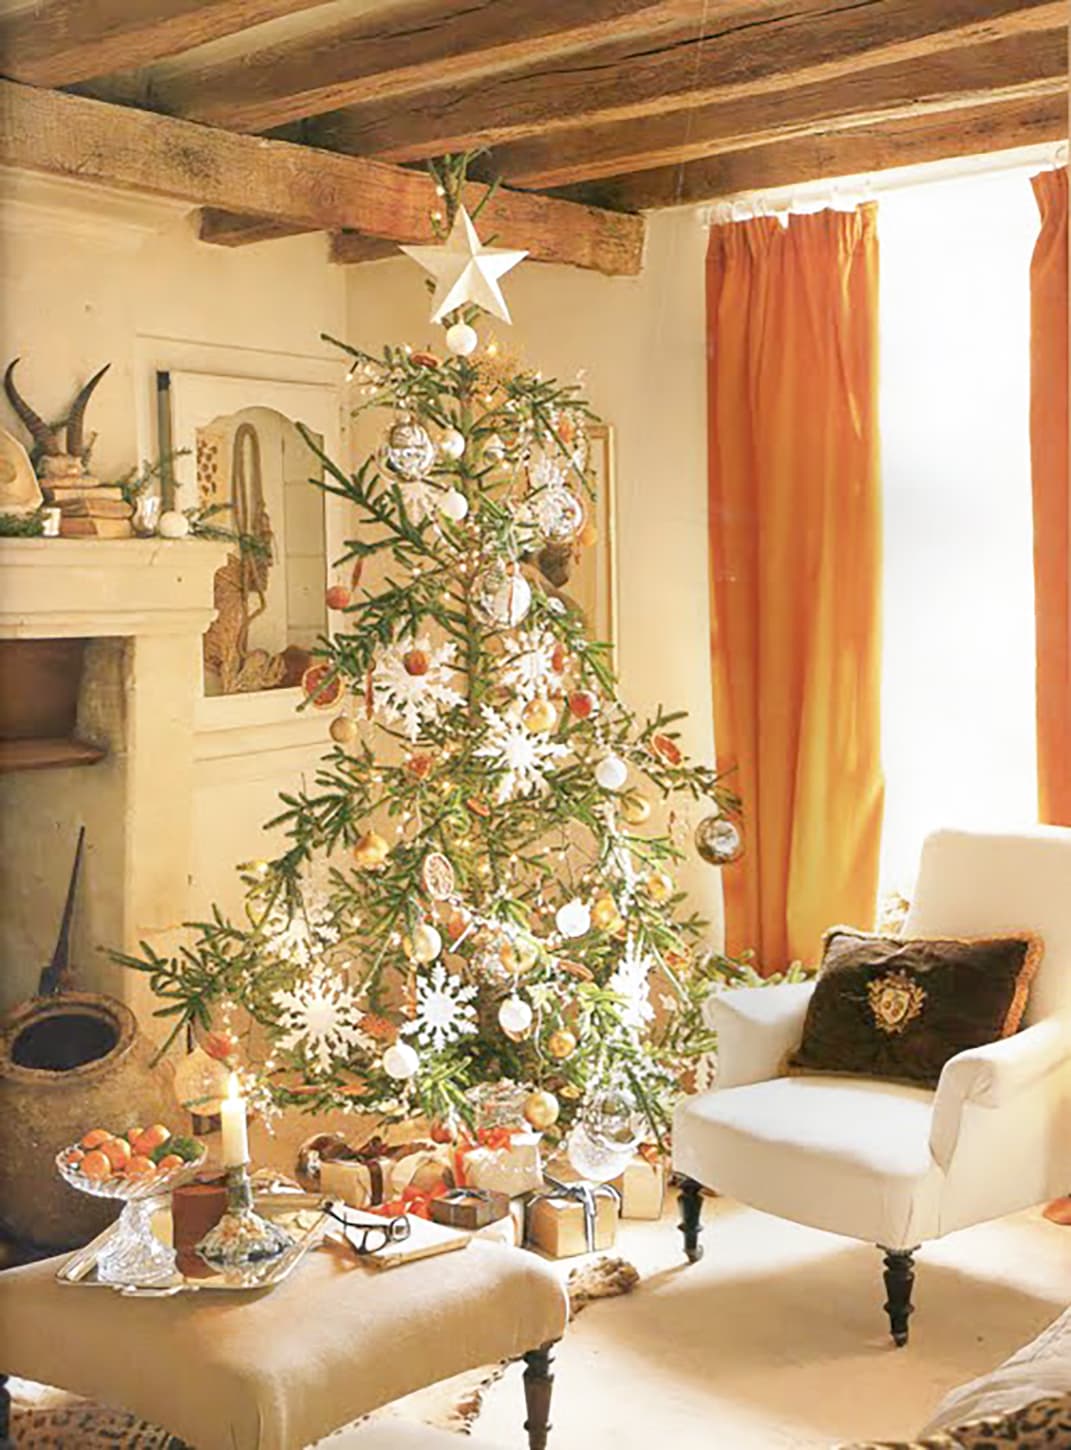 orange decorations christmas in Veranda via Cindy Hattersley's blog